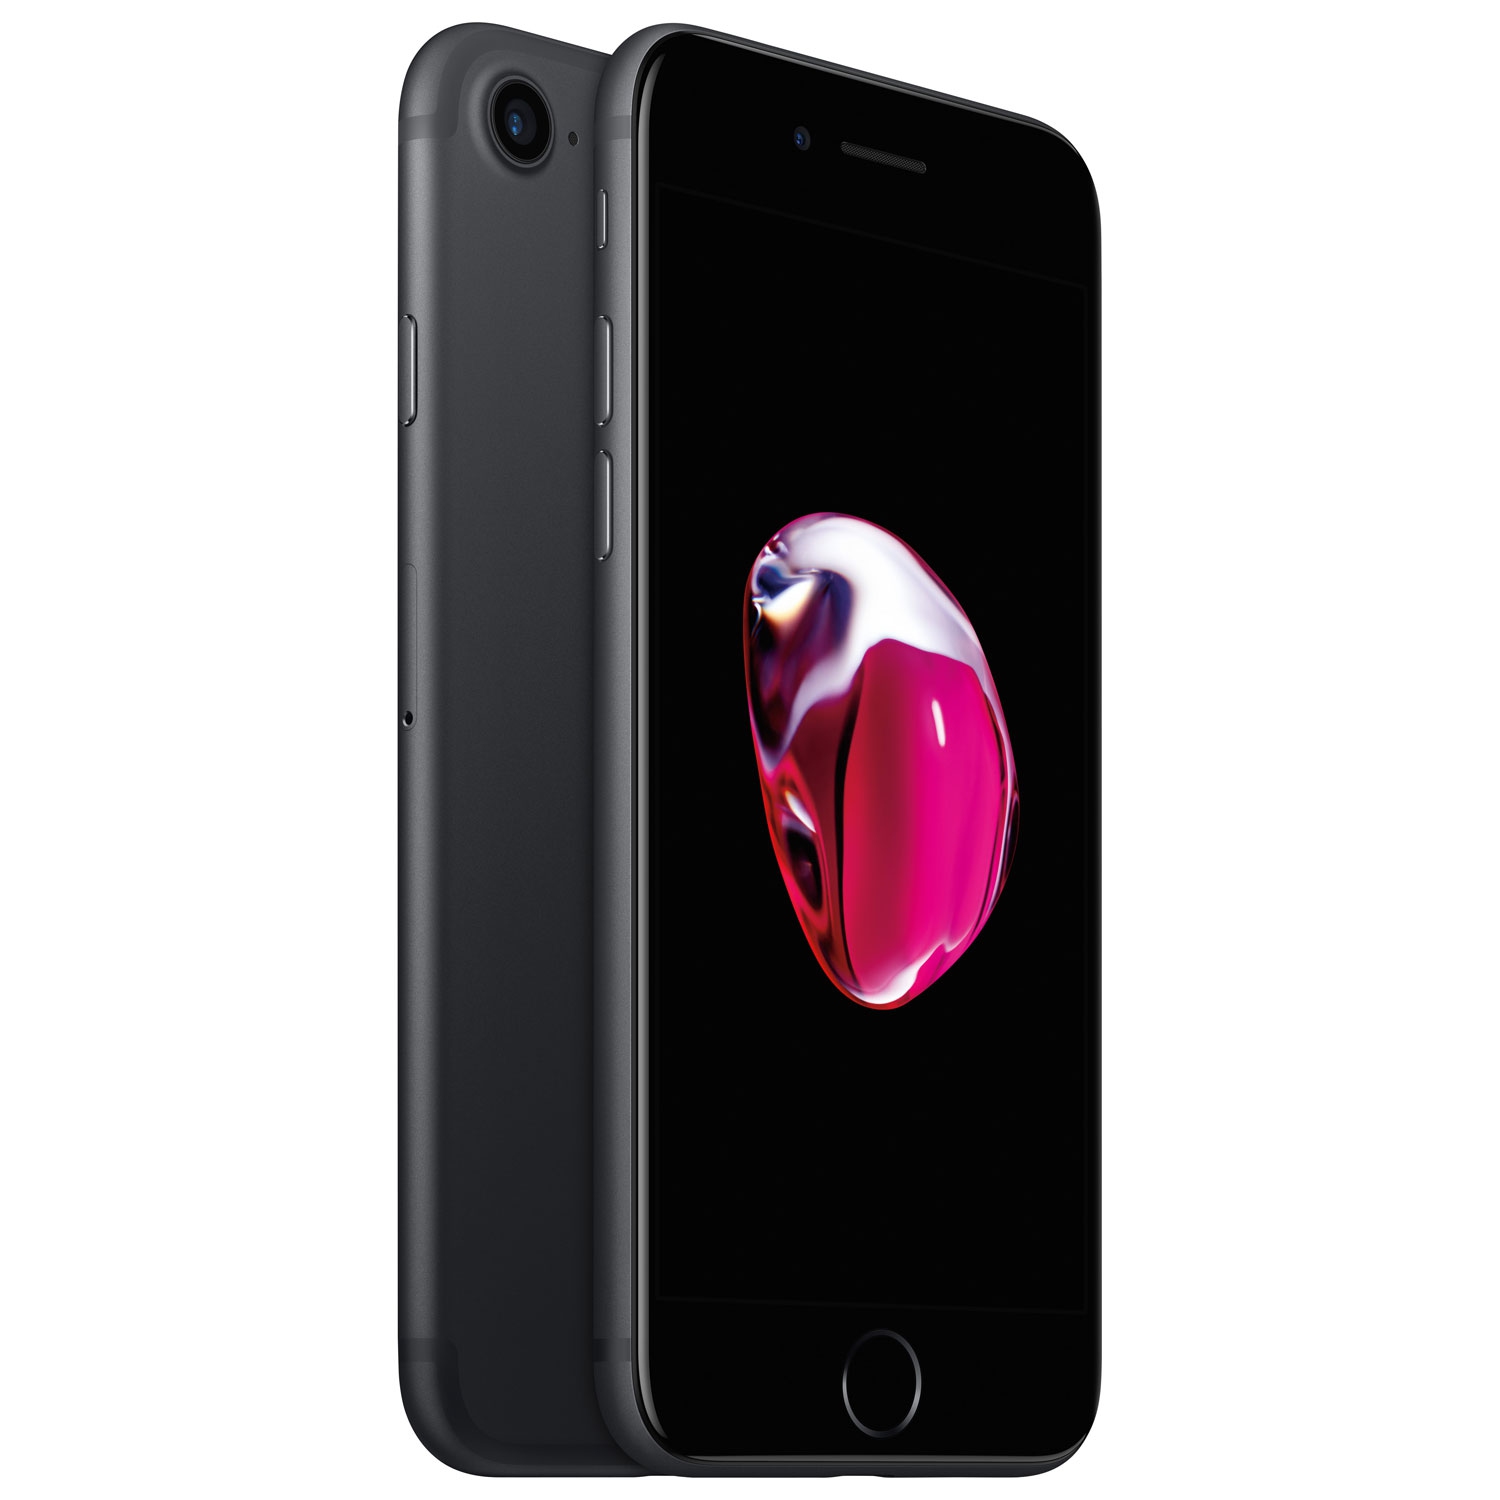 Apple iPhone 7 32GB Smartphone - Black - Unlocked - Open Box